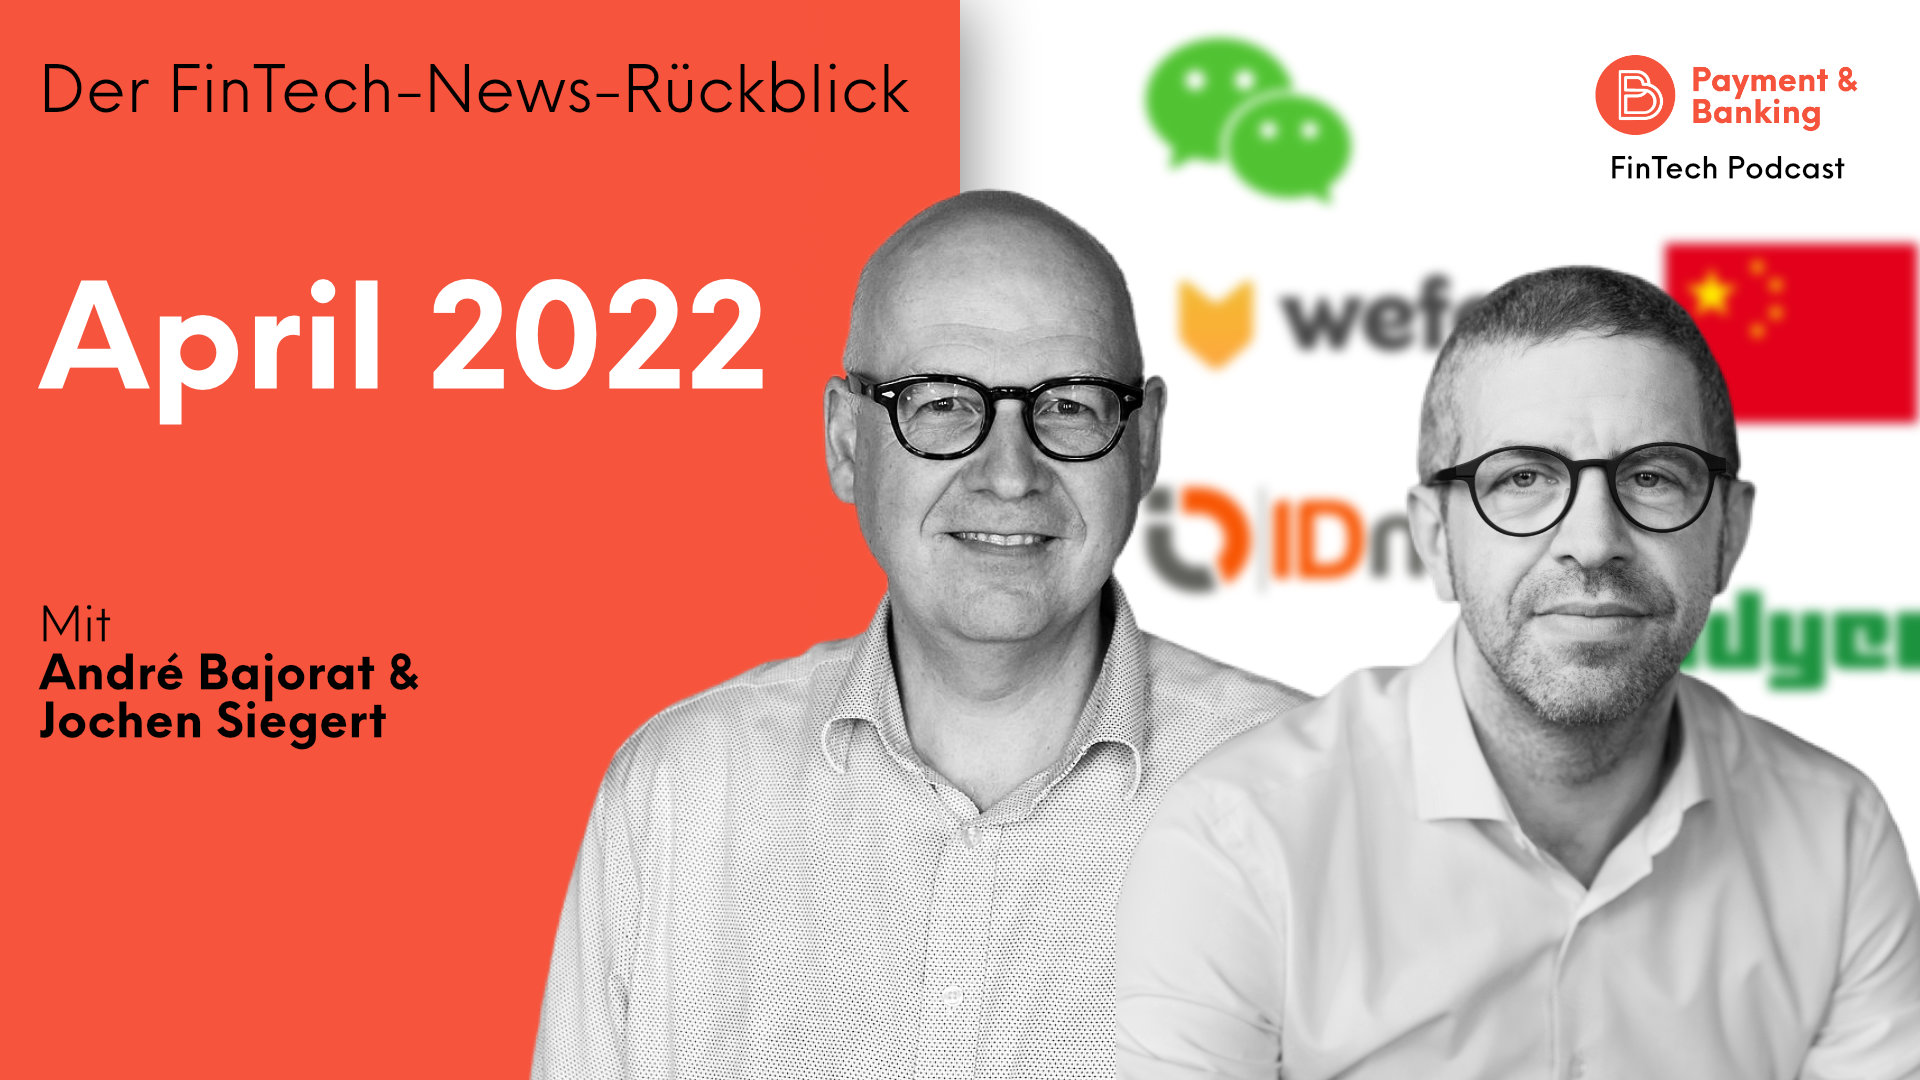 News-Rückblick April 2022: Mit IDnow, Adyen, WeChat u.v.m.